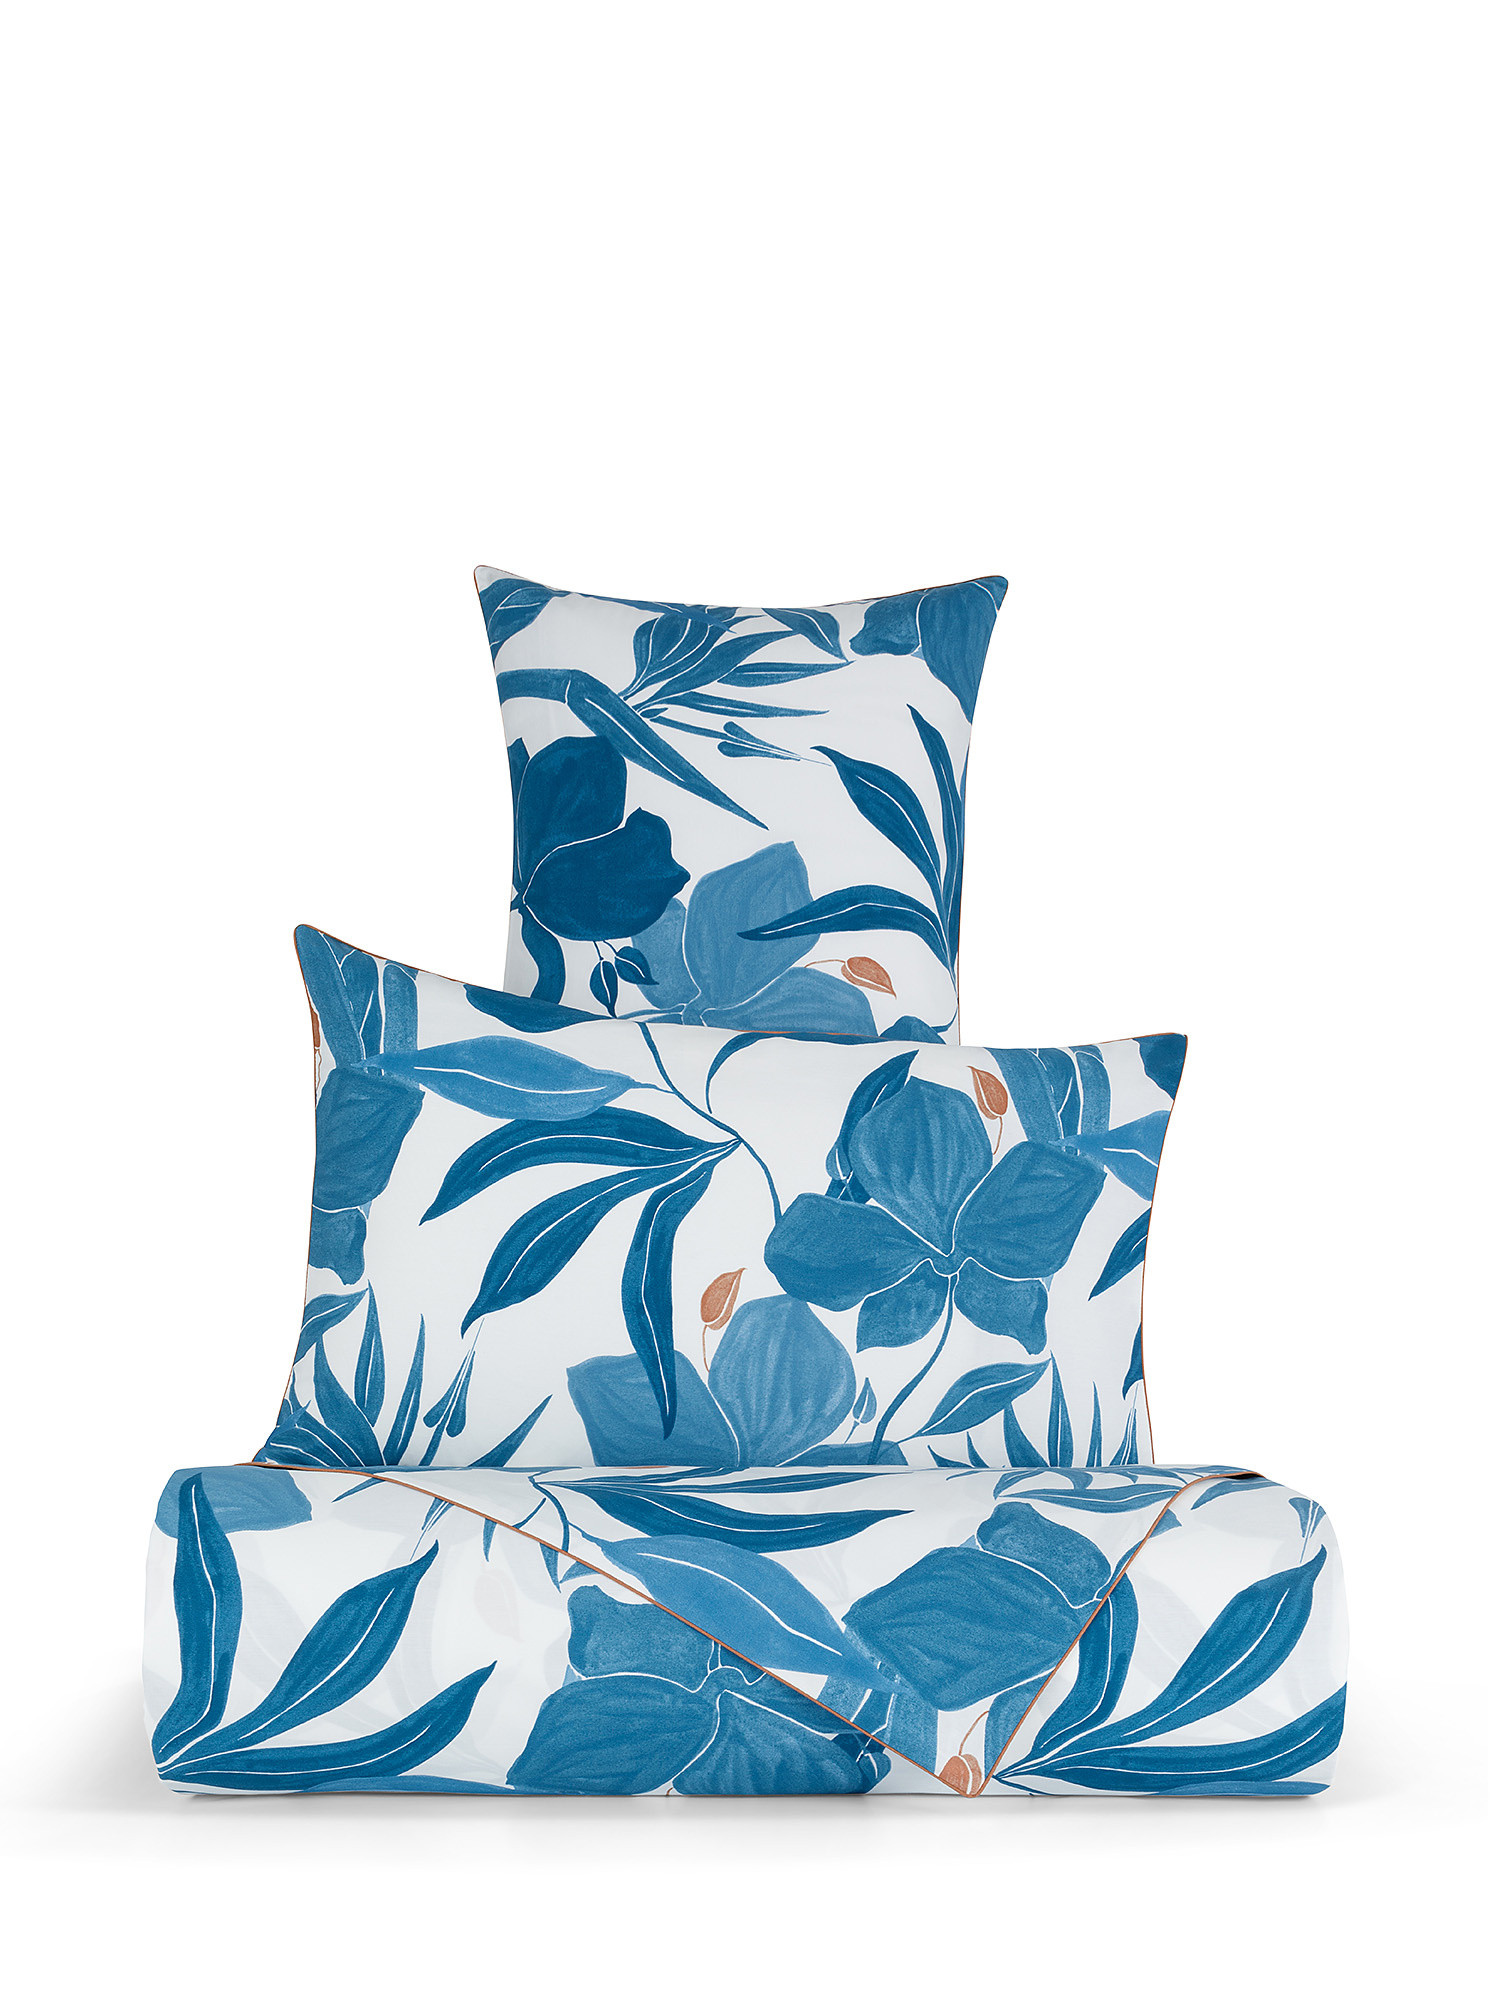 Federa cotone percalle fantasia floreale, Blu, large image number 1